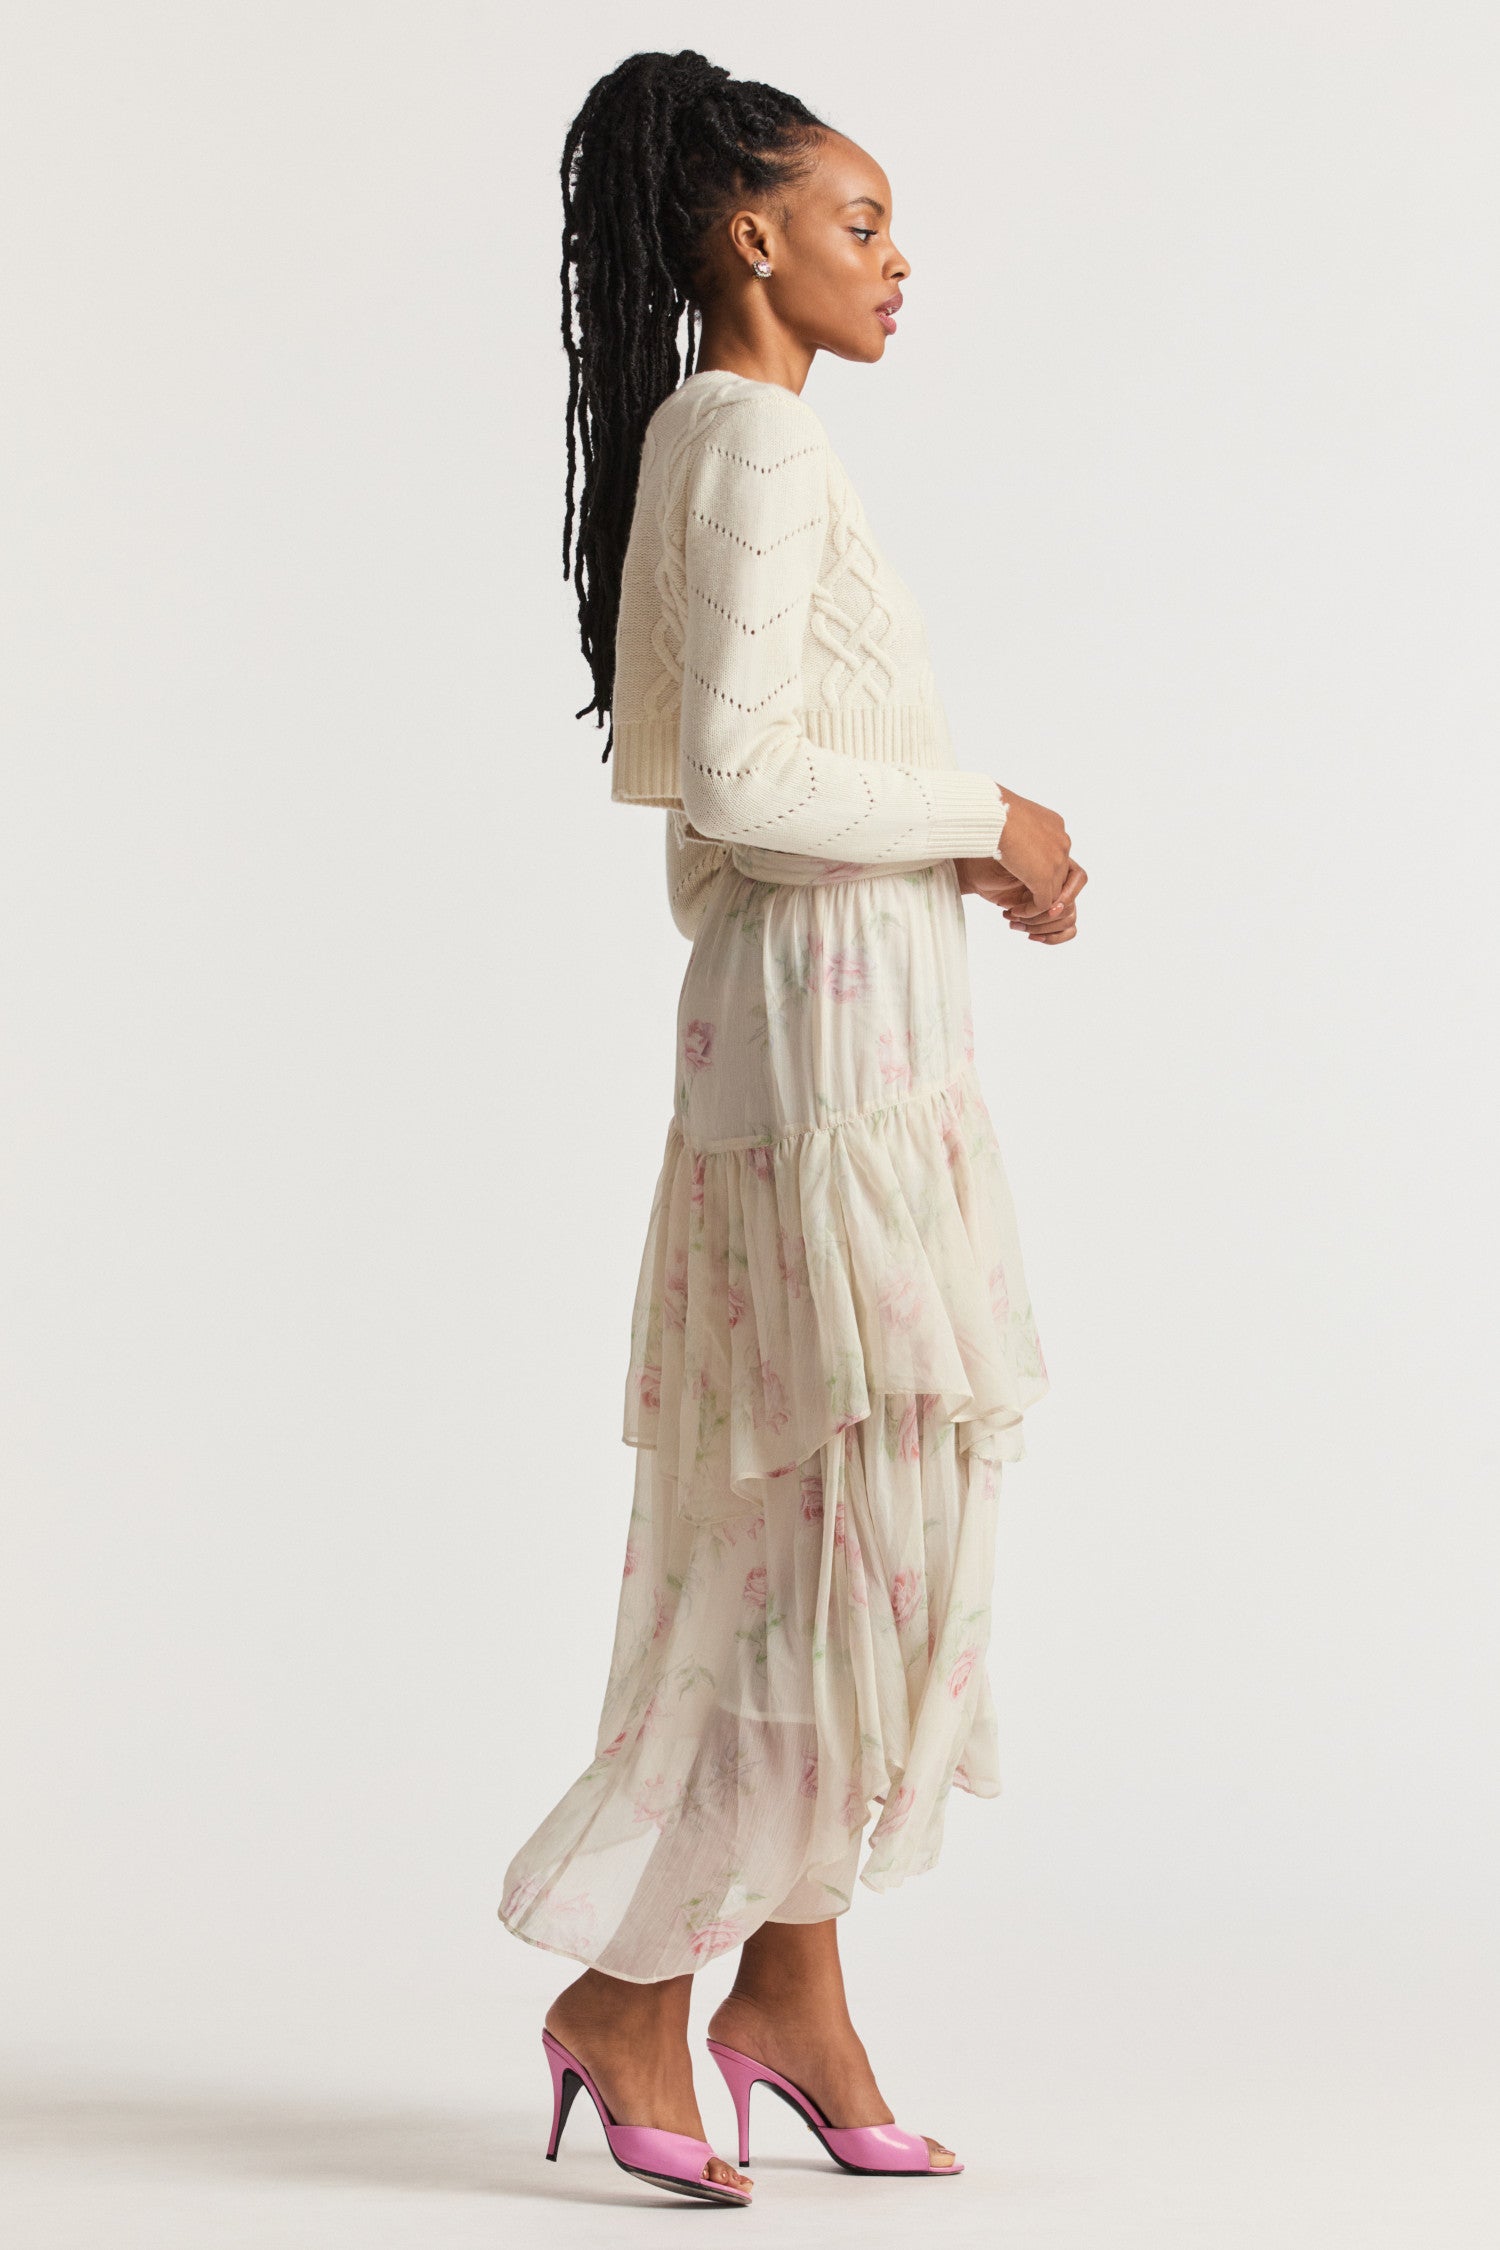 Alex Floral Midi Skirt - Women's Skirts | Shop LoveShackFancy.com